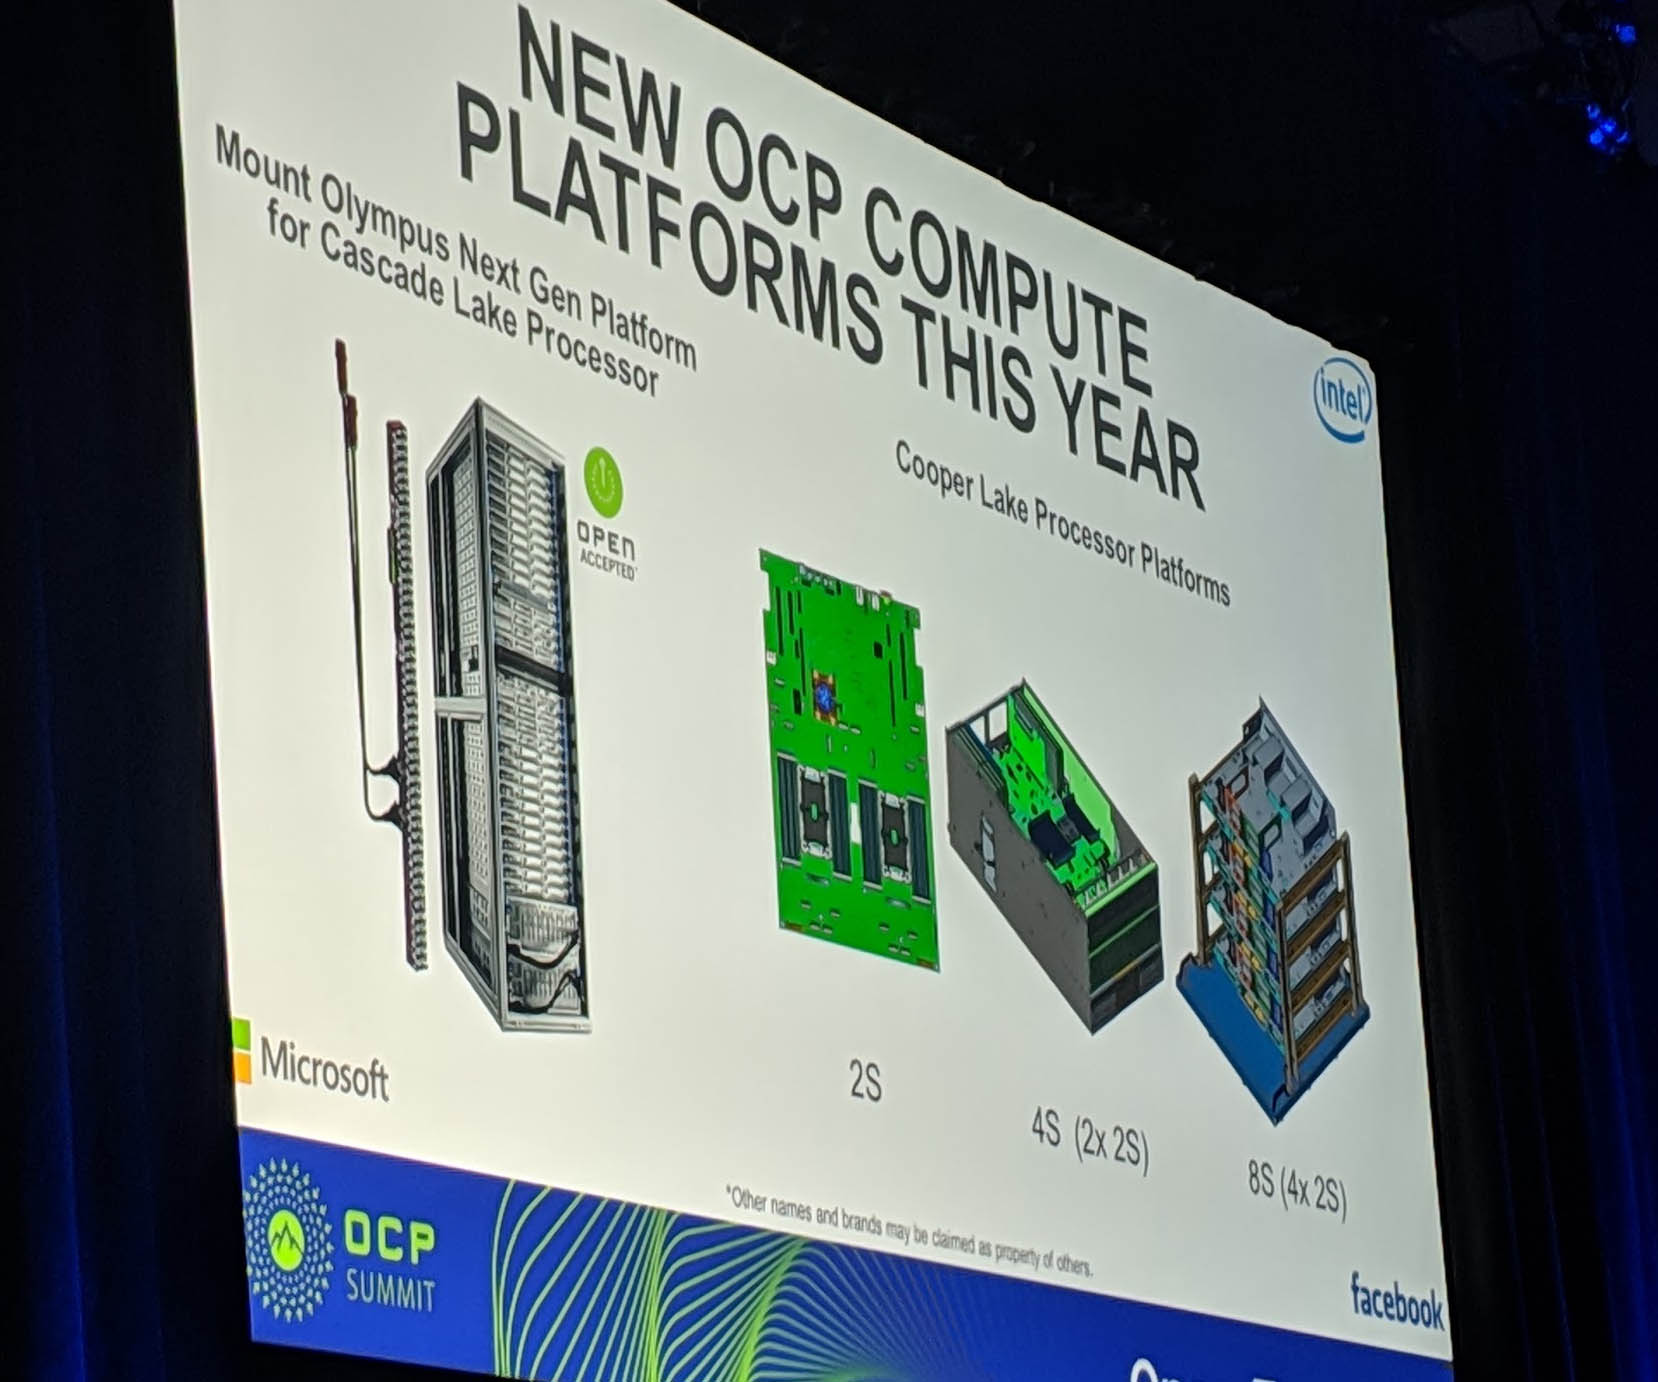 Intel Cooper Lake OCP Summit 2019